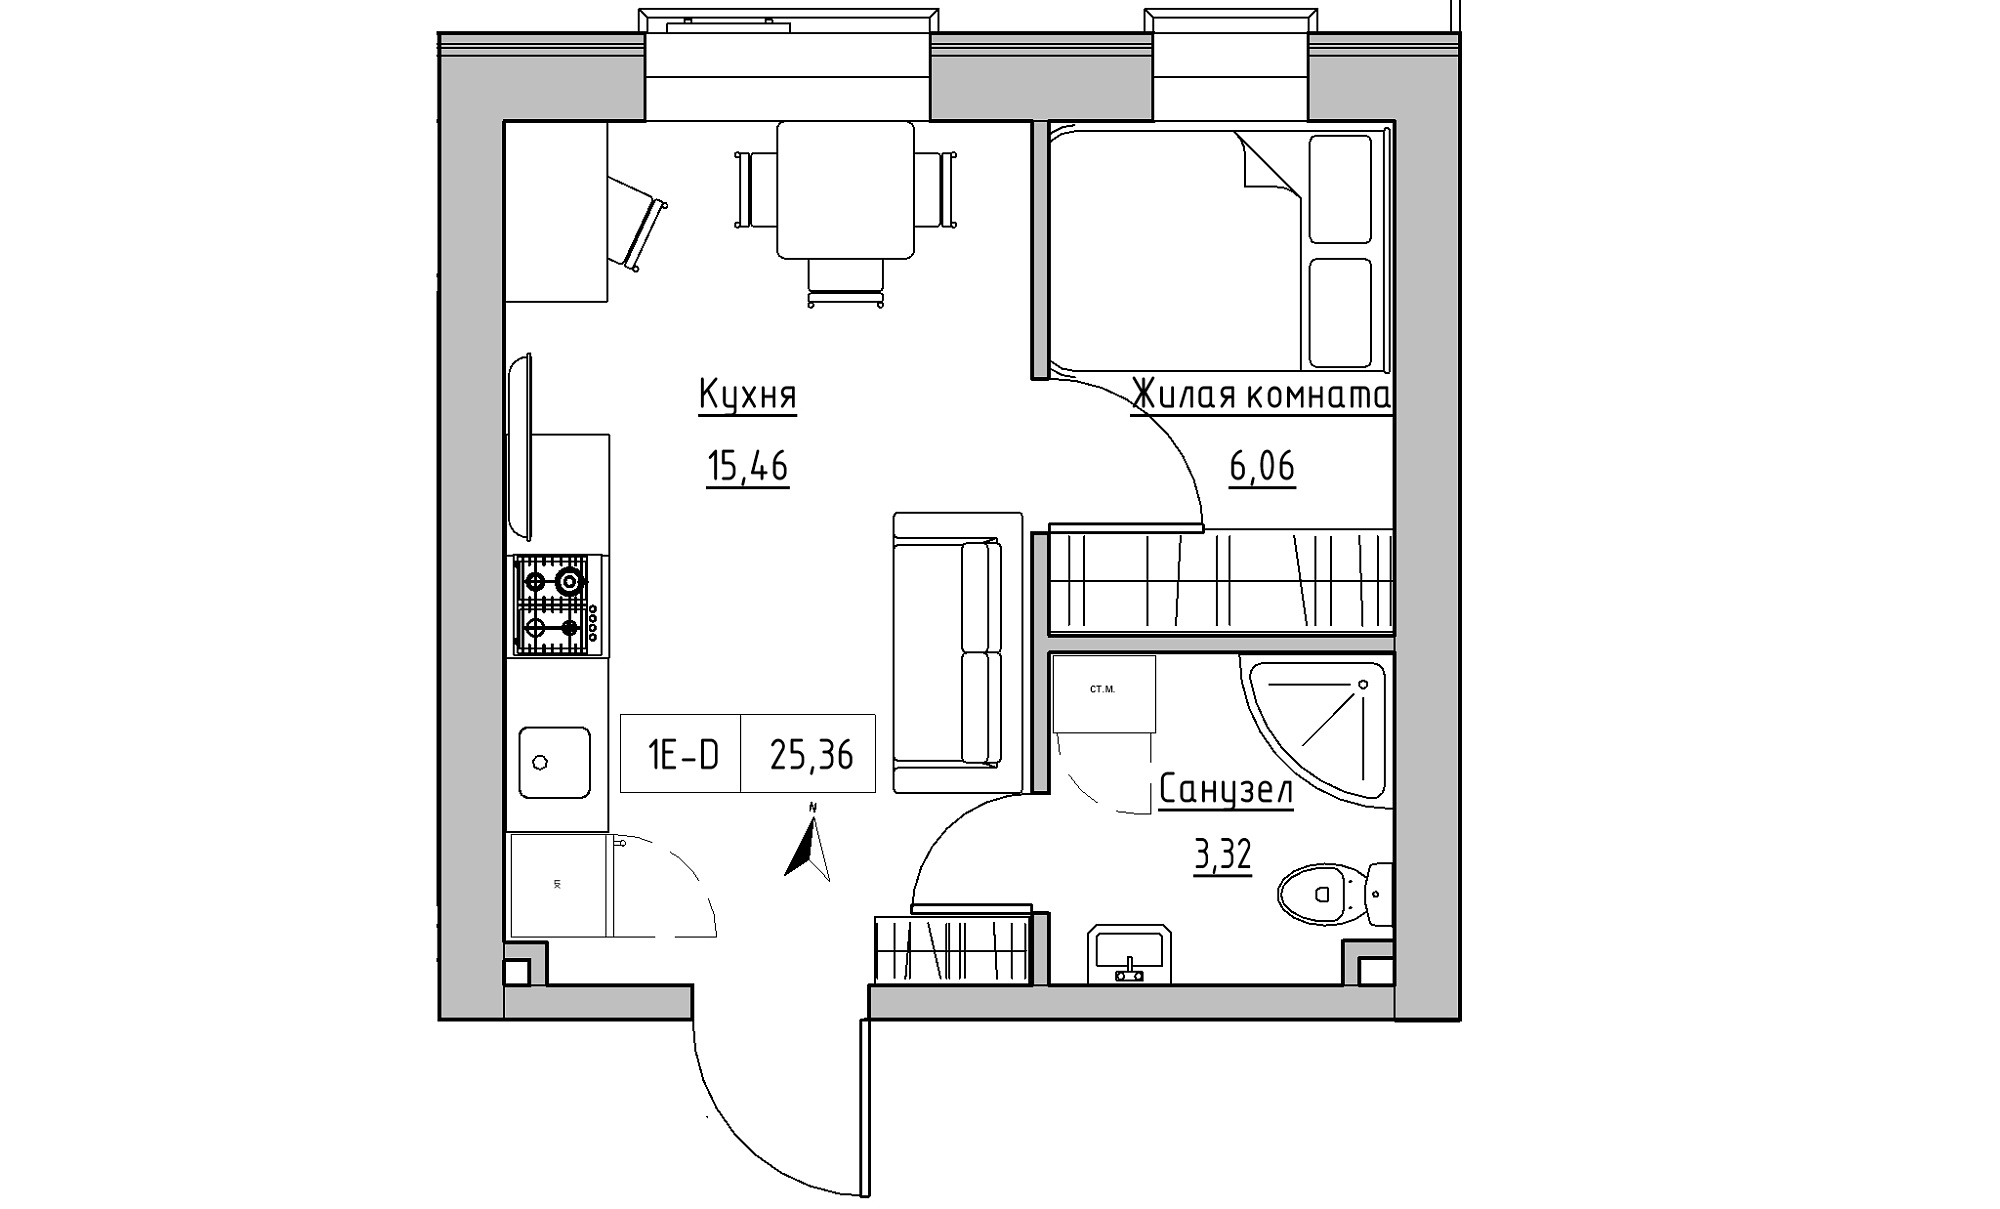 Planning 1-rm flats area 25.36m2, KS-016-05/0002.